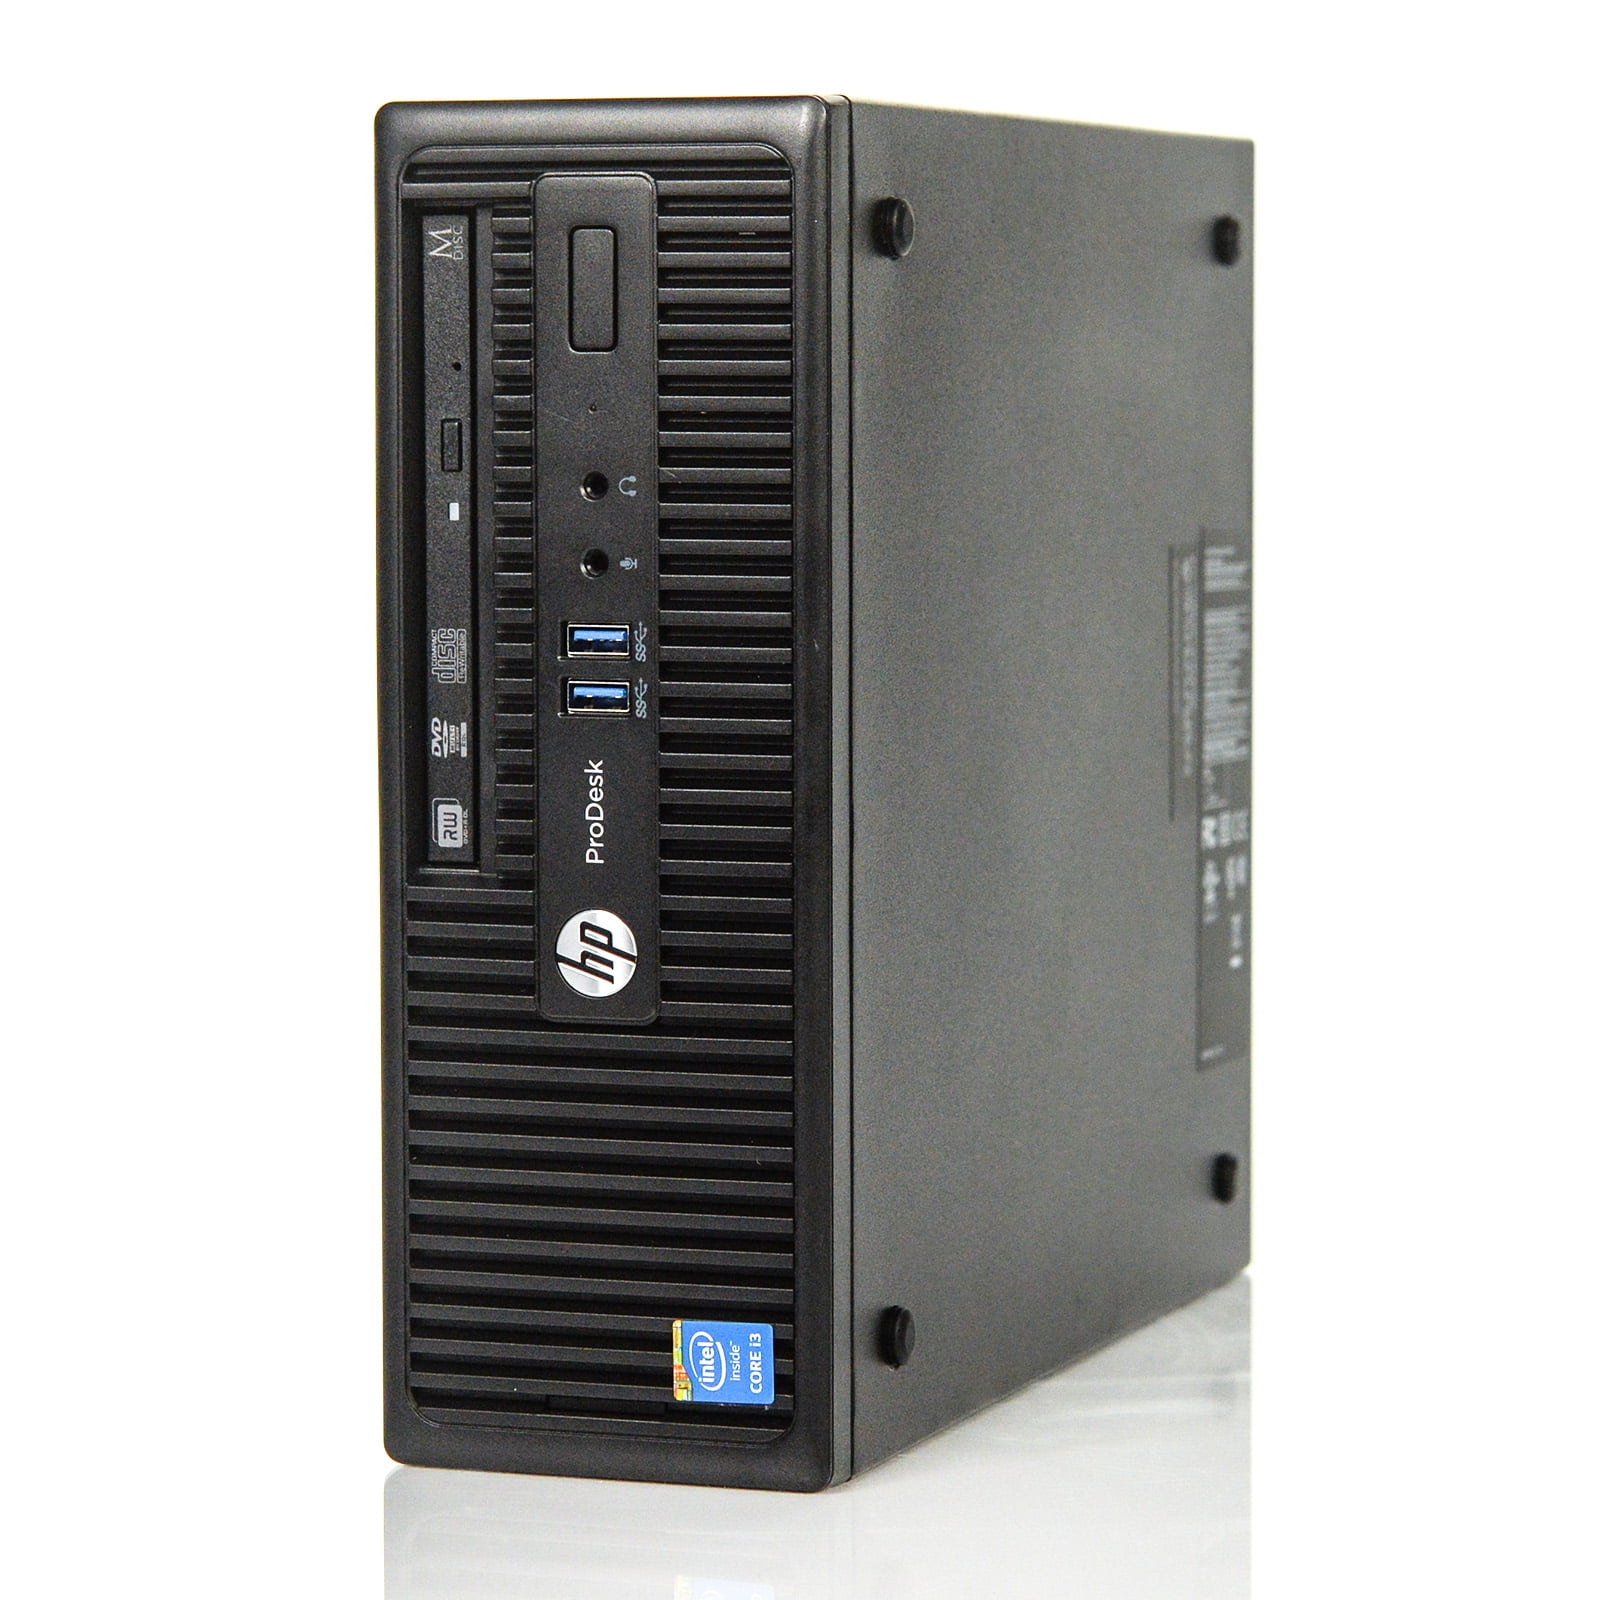 HP ProDesk 400 SFF Desktop G1 i3-4130 3.4GHz 8GB 1TB SATA PC WIFI 